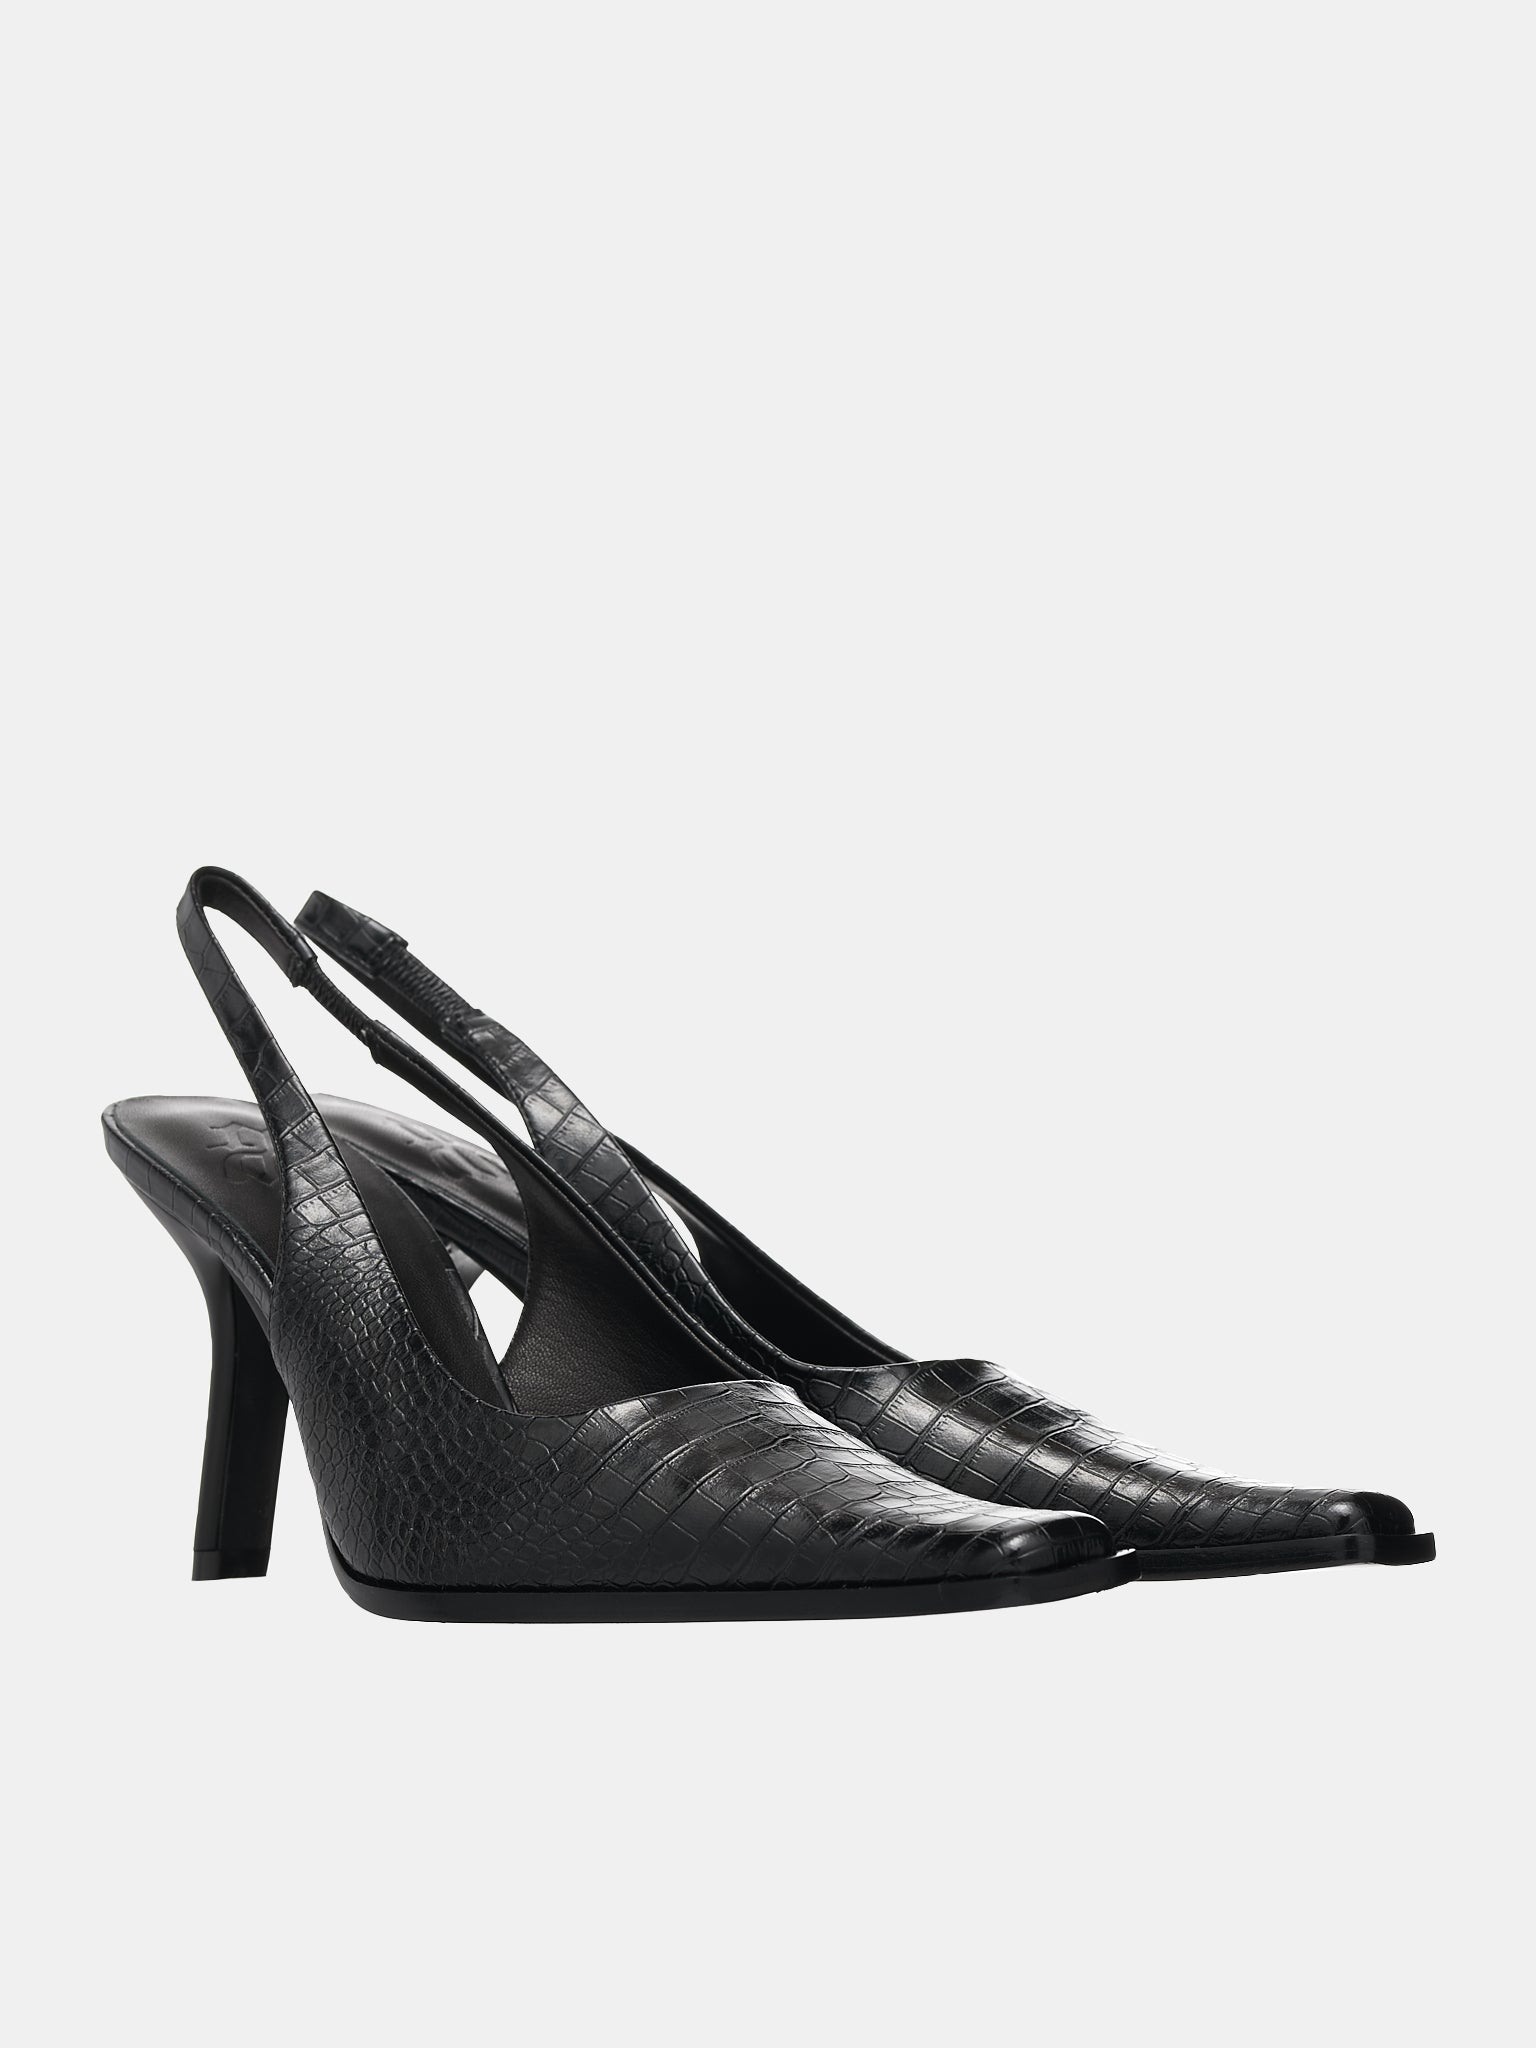 MAEGAN Black Patent Slingback Heel | Women's Heels – Steve Madden